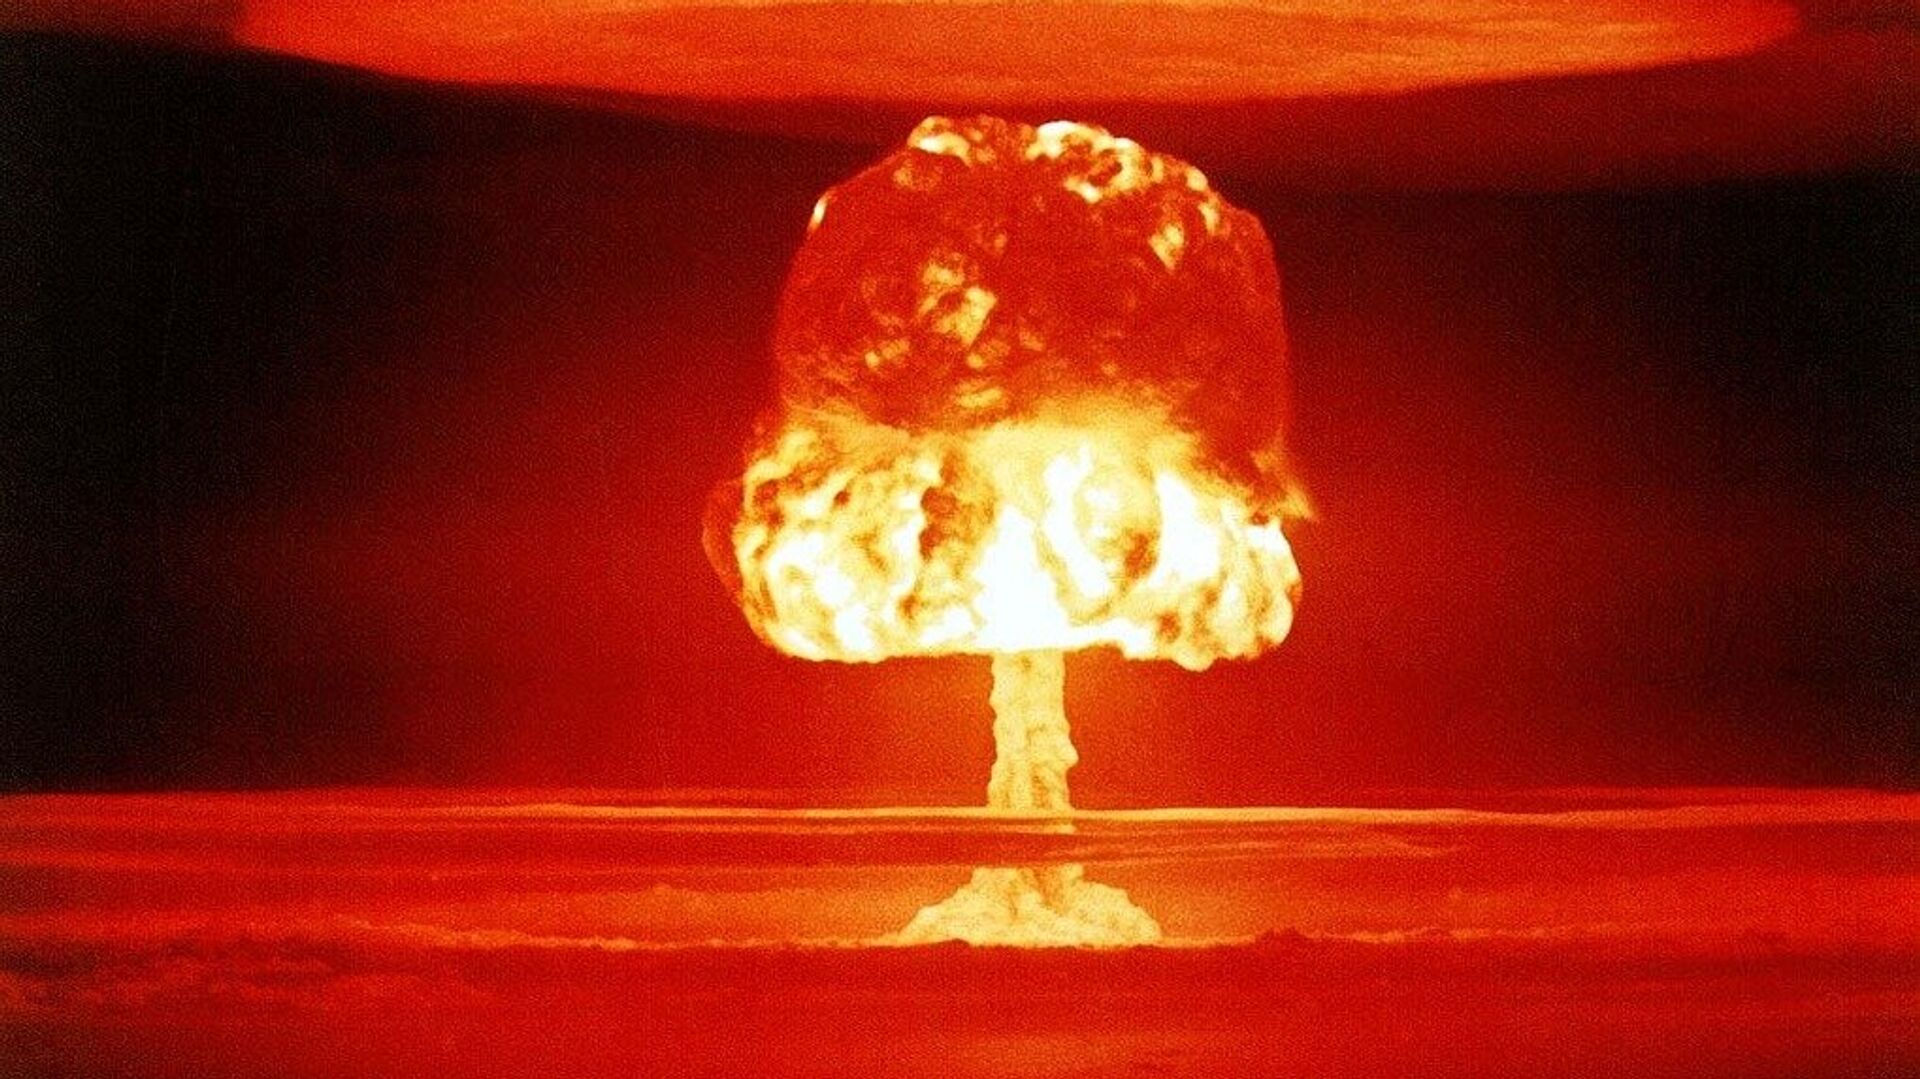 Nuclear explosion - Sputnik International, 1920, 15.03.2022